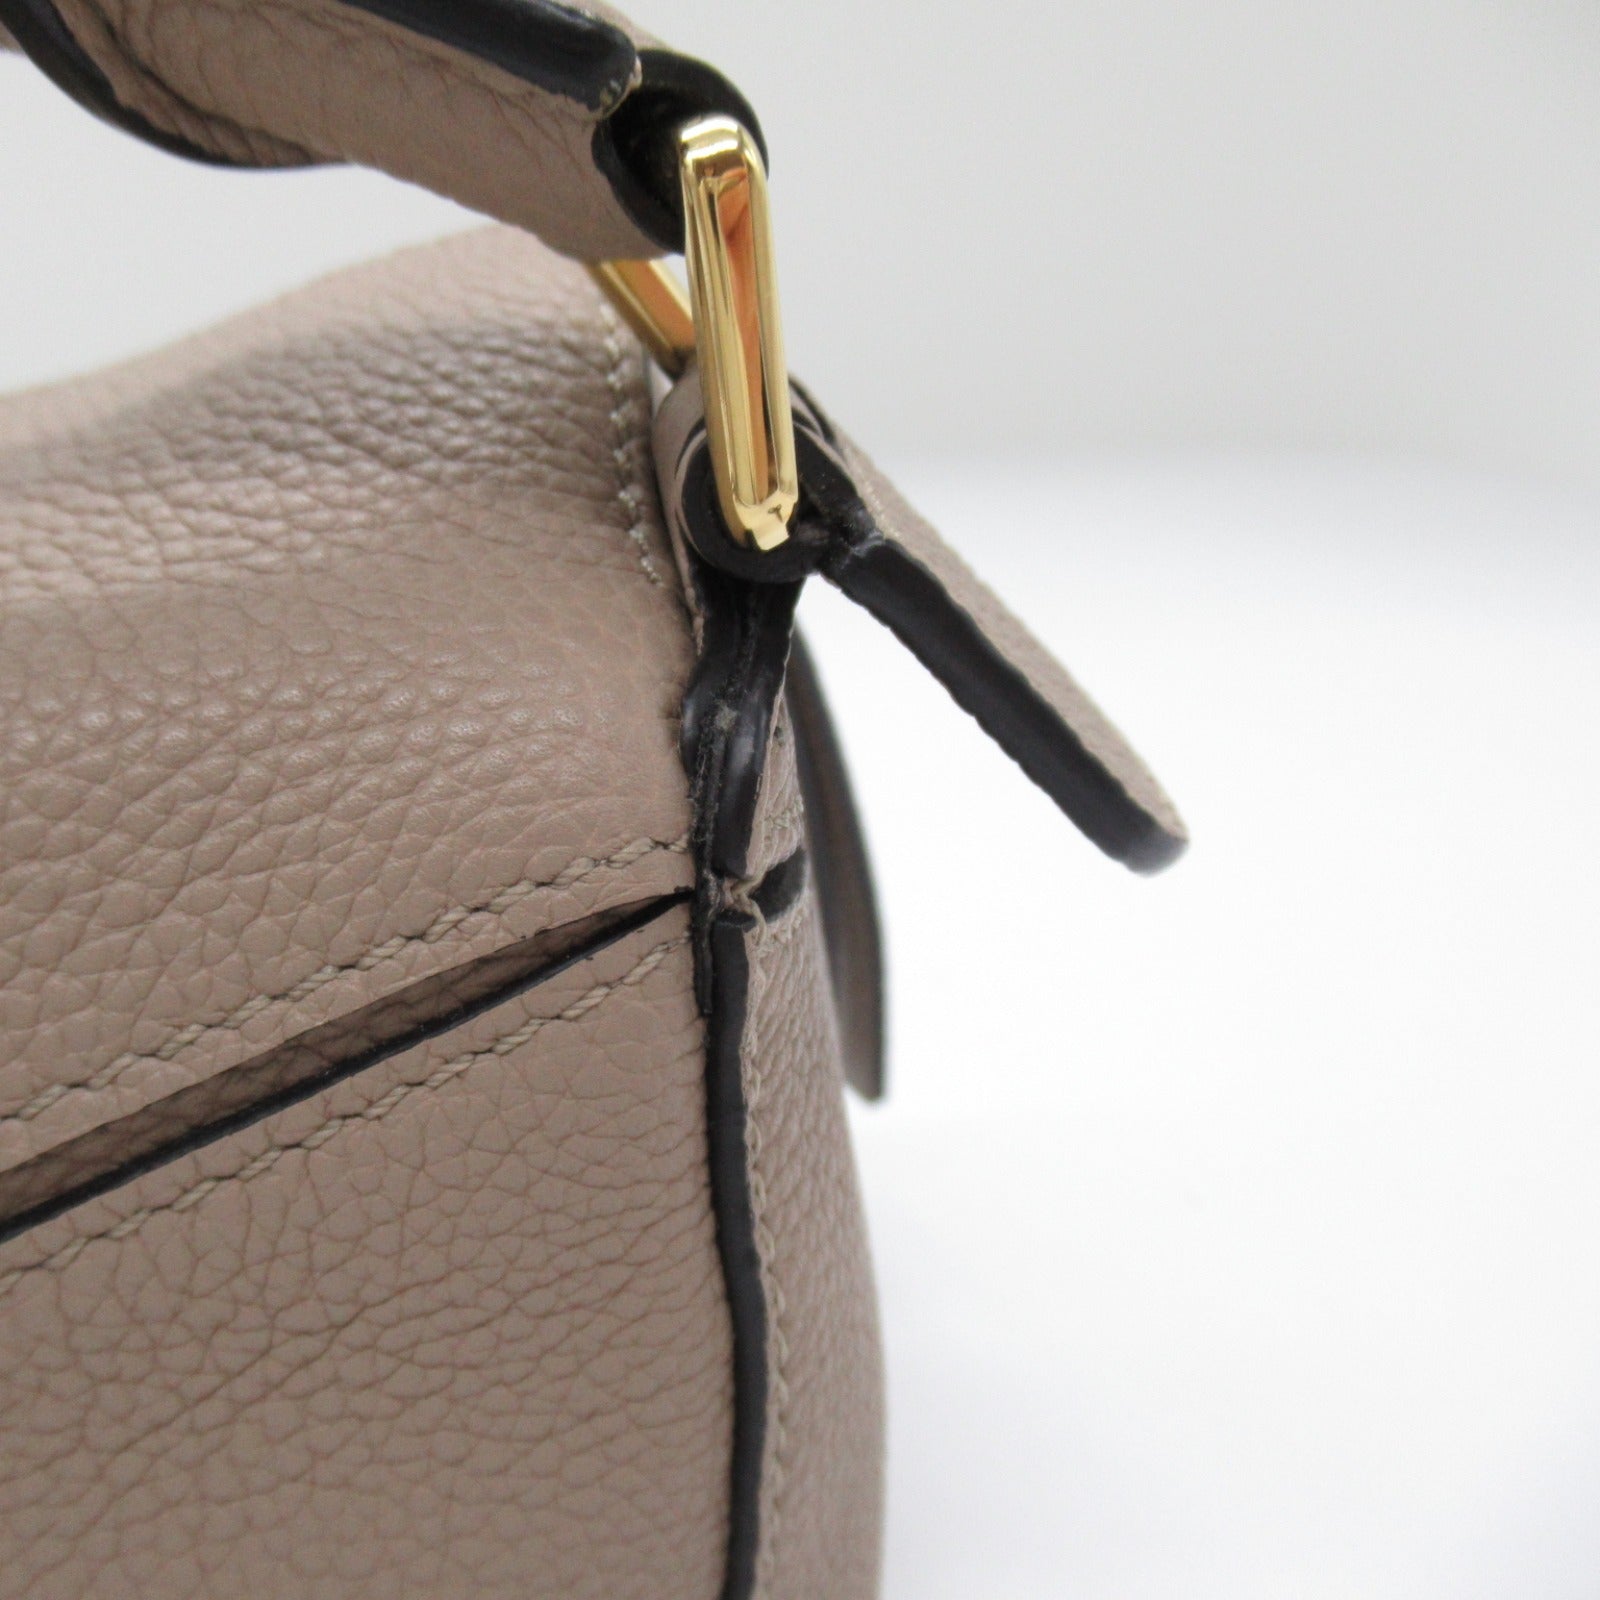 Loewe LOEWE Puzzle Bag Mini Shoulder Bag Leather  Beige Collection